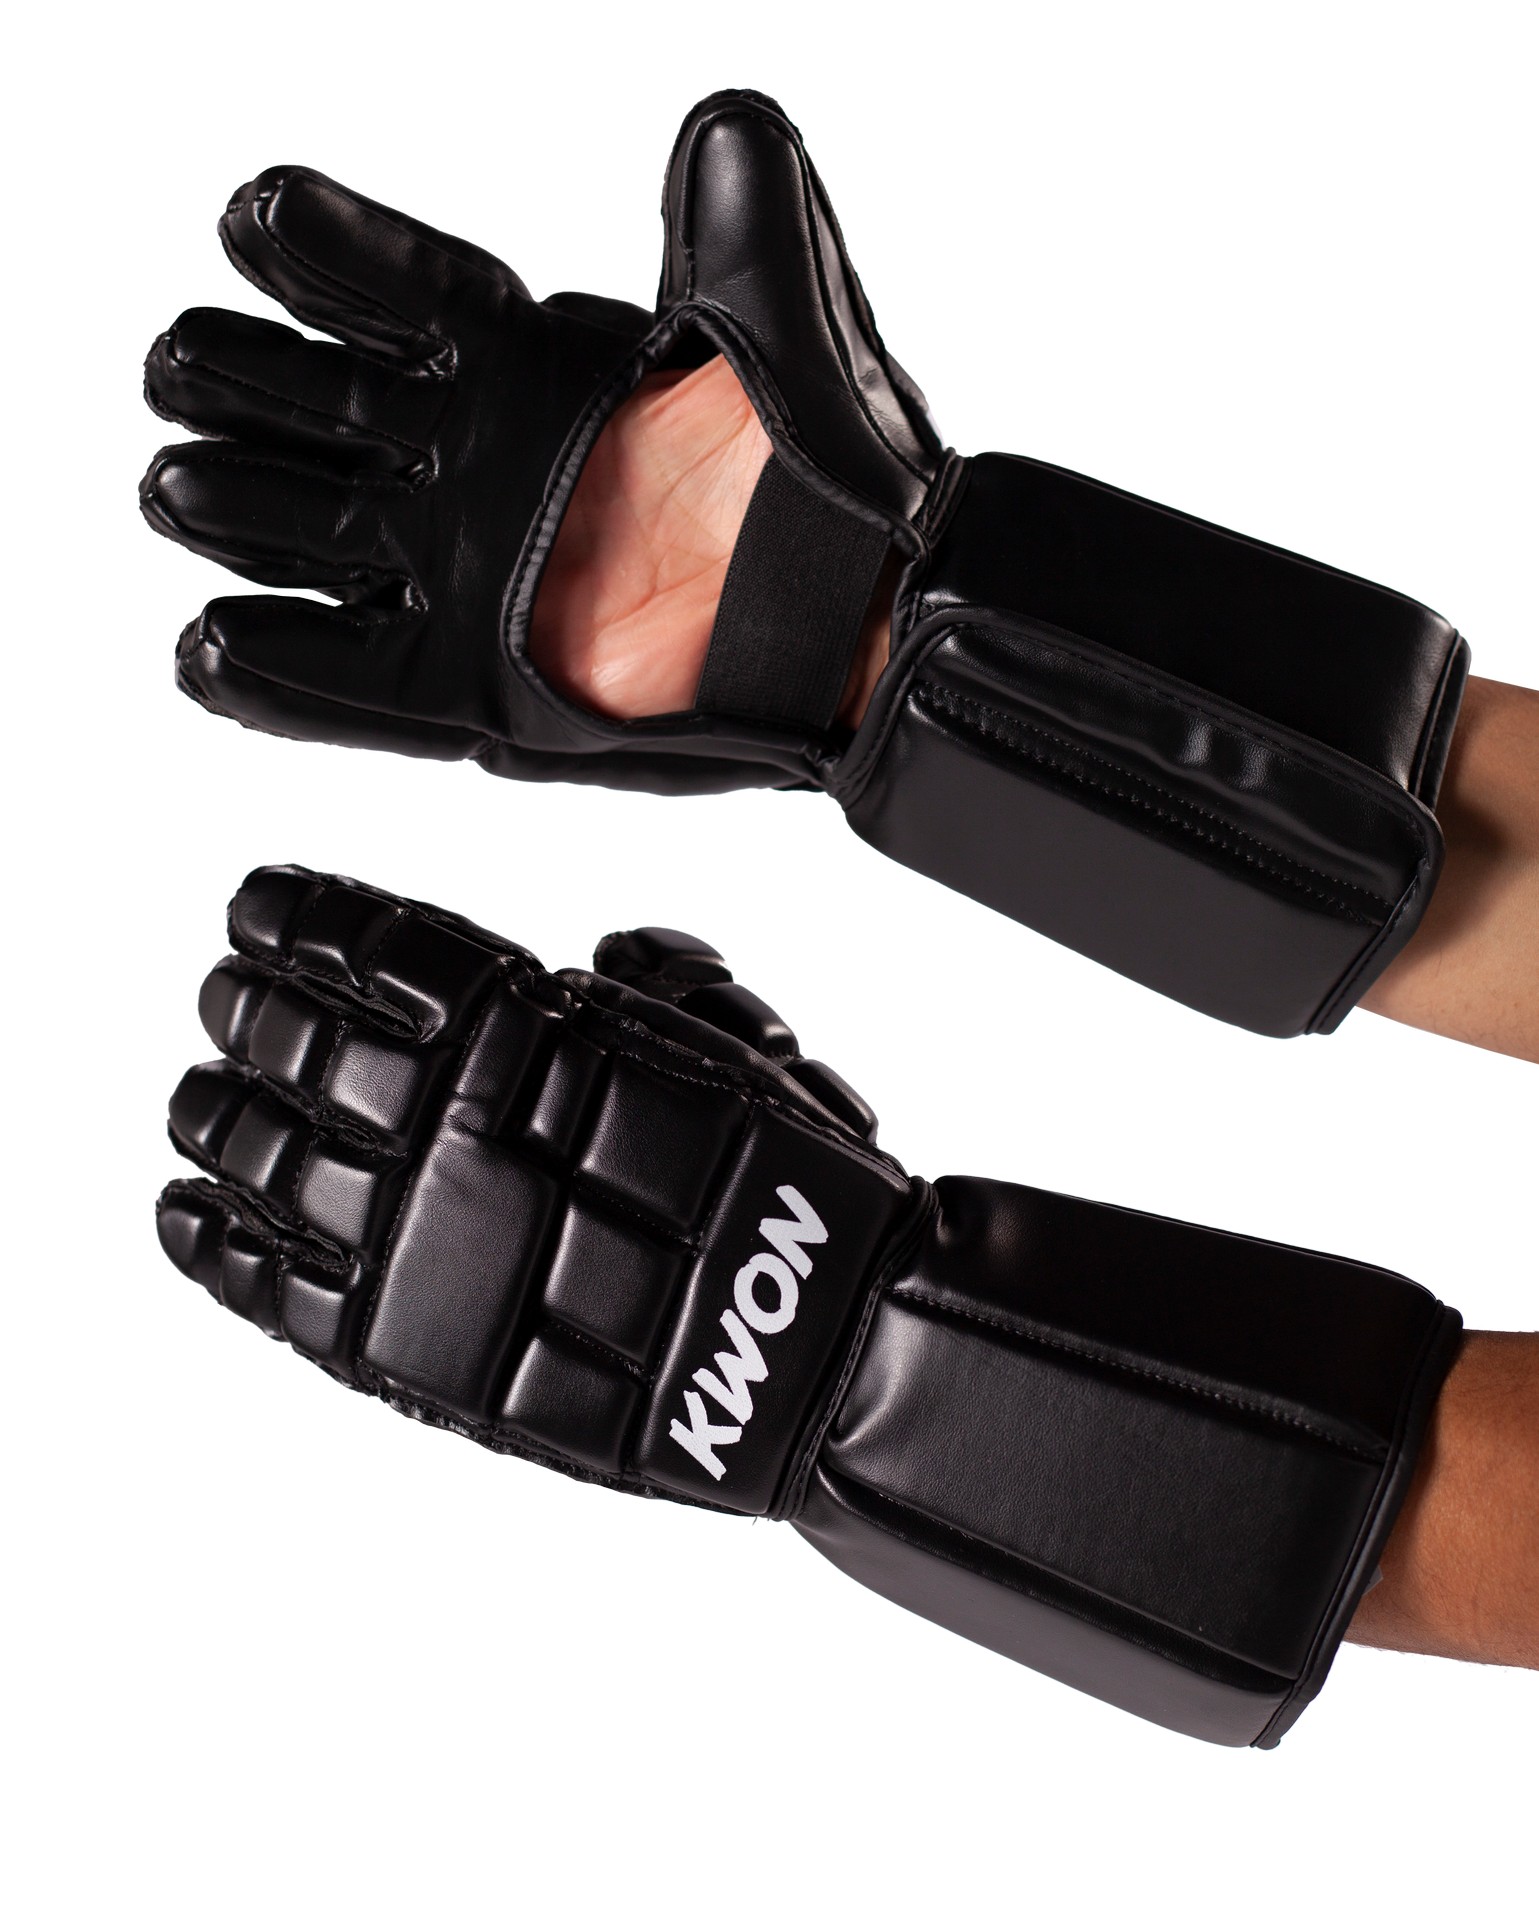 KWON Escrima Gloves | Protection Forearm